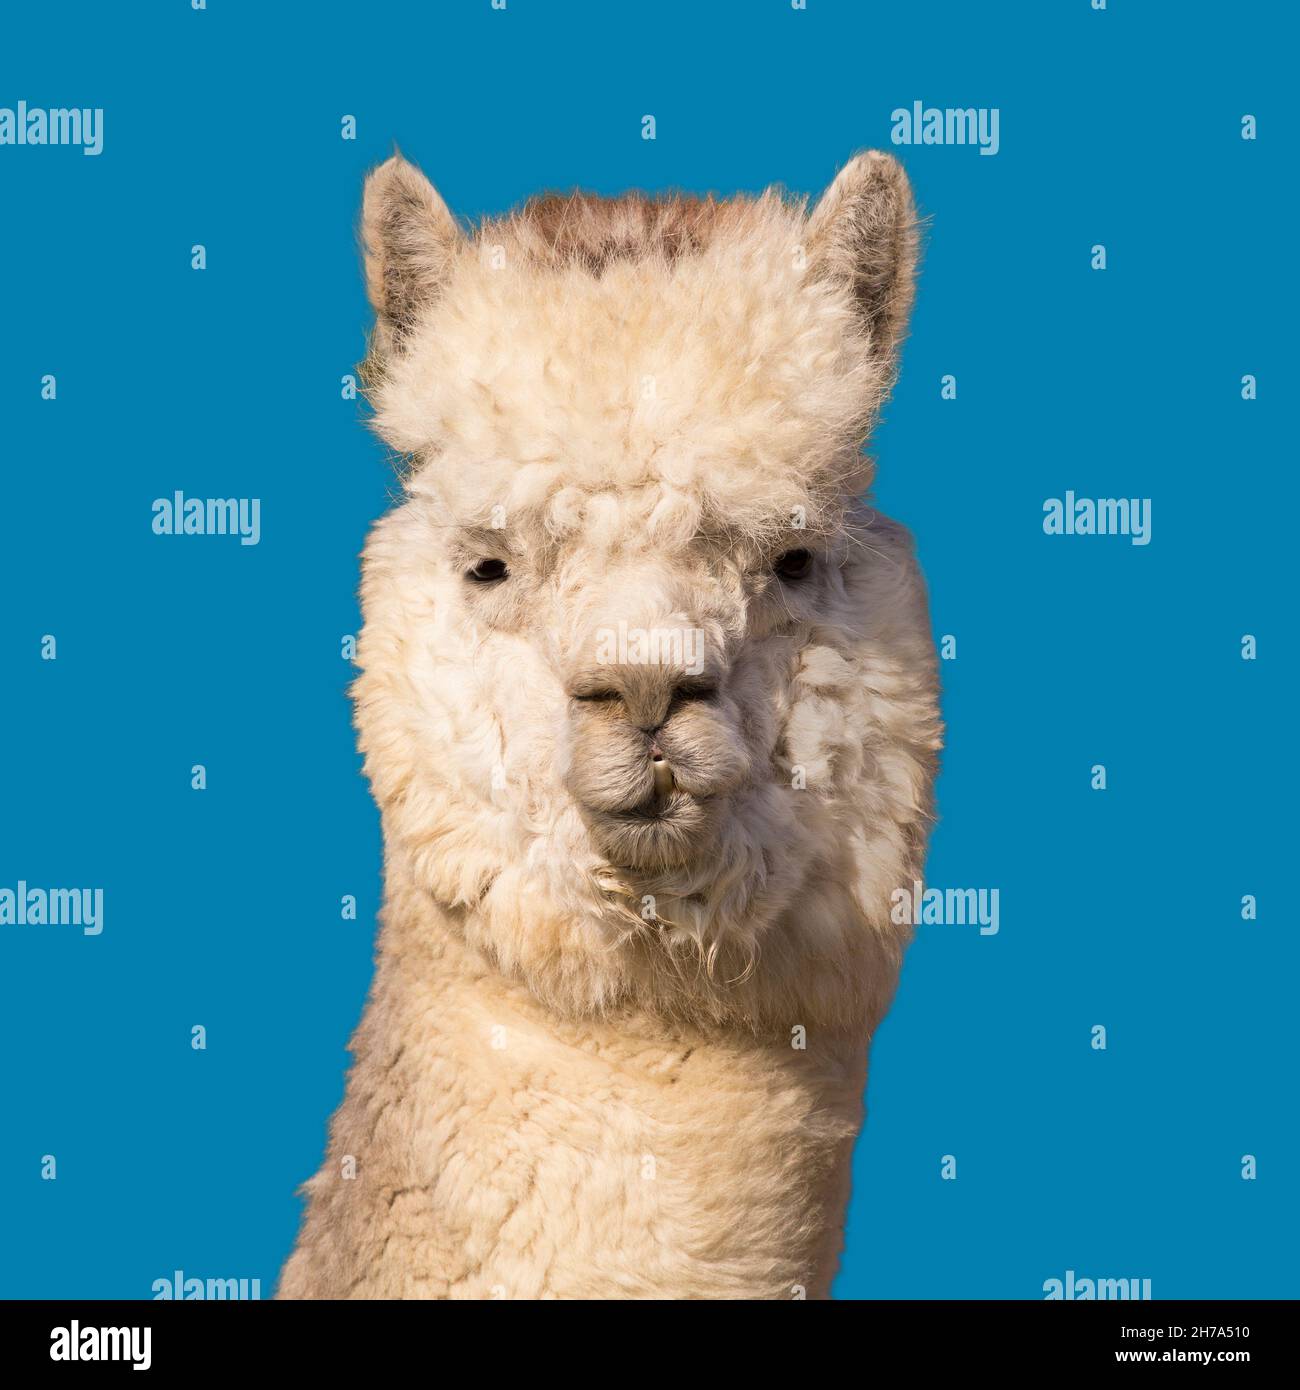 Funny white alpaca head on blue background. Stock Photo